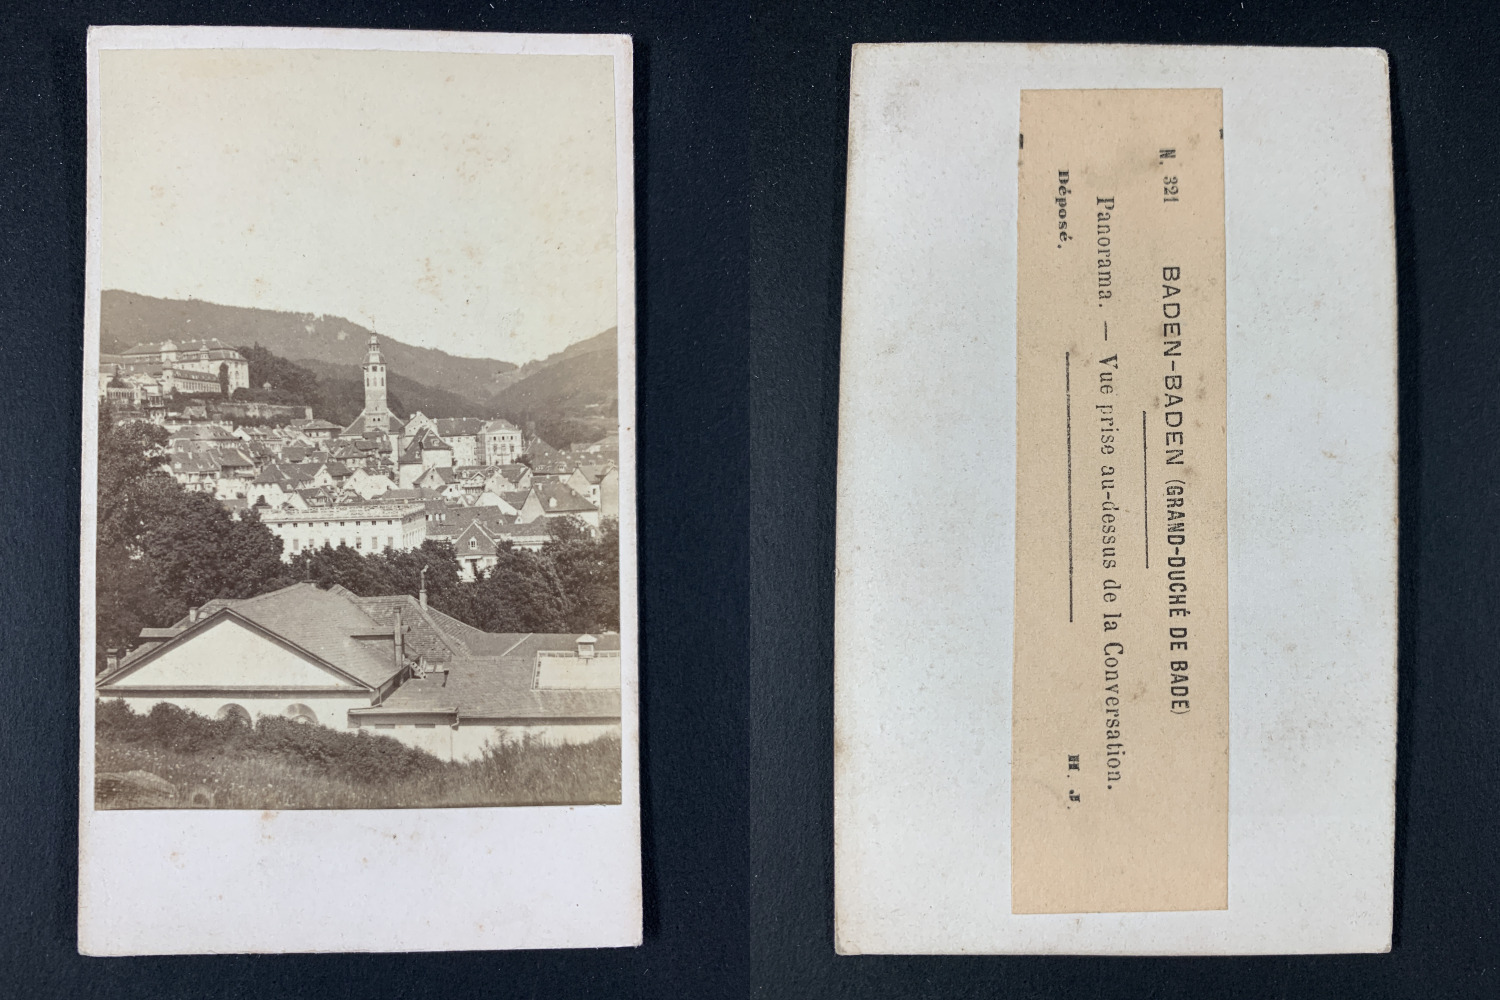 Germany, Baden-Baden, Panorama Vintage cdv albumen print, CDV, albumi print